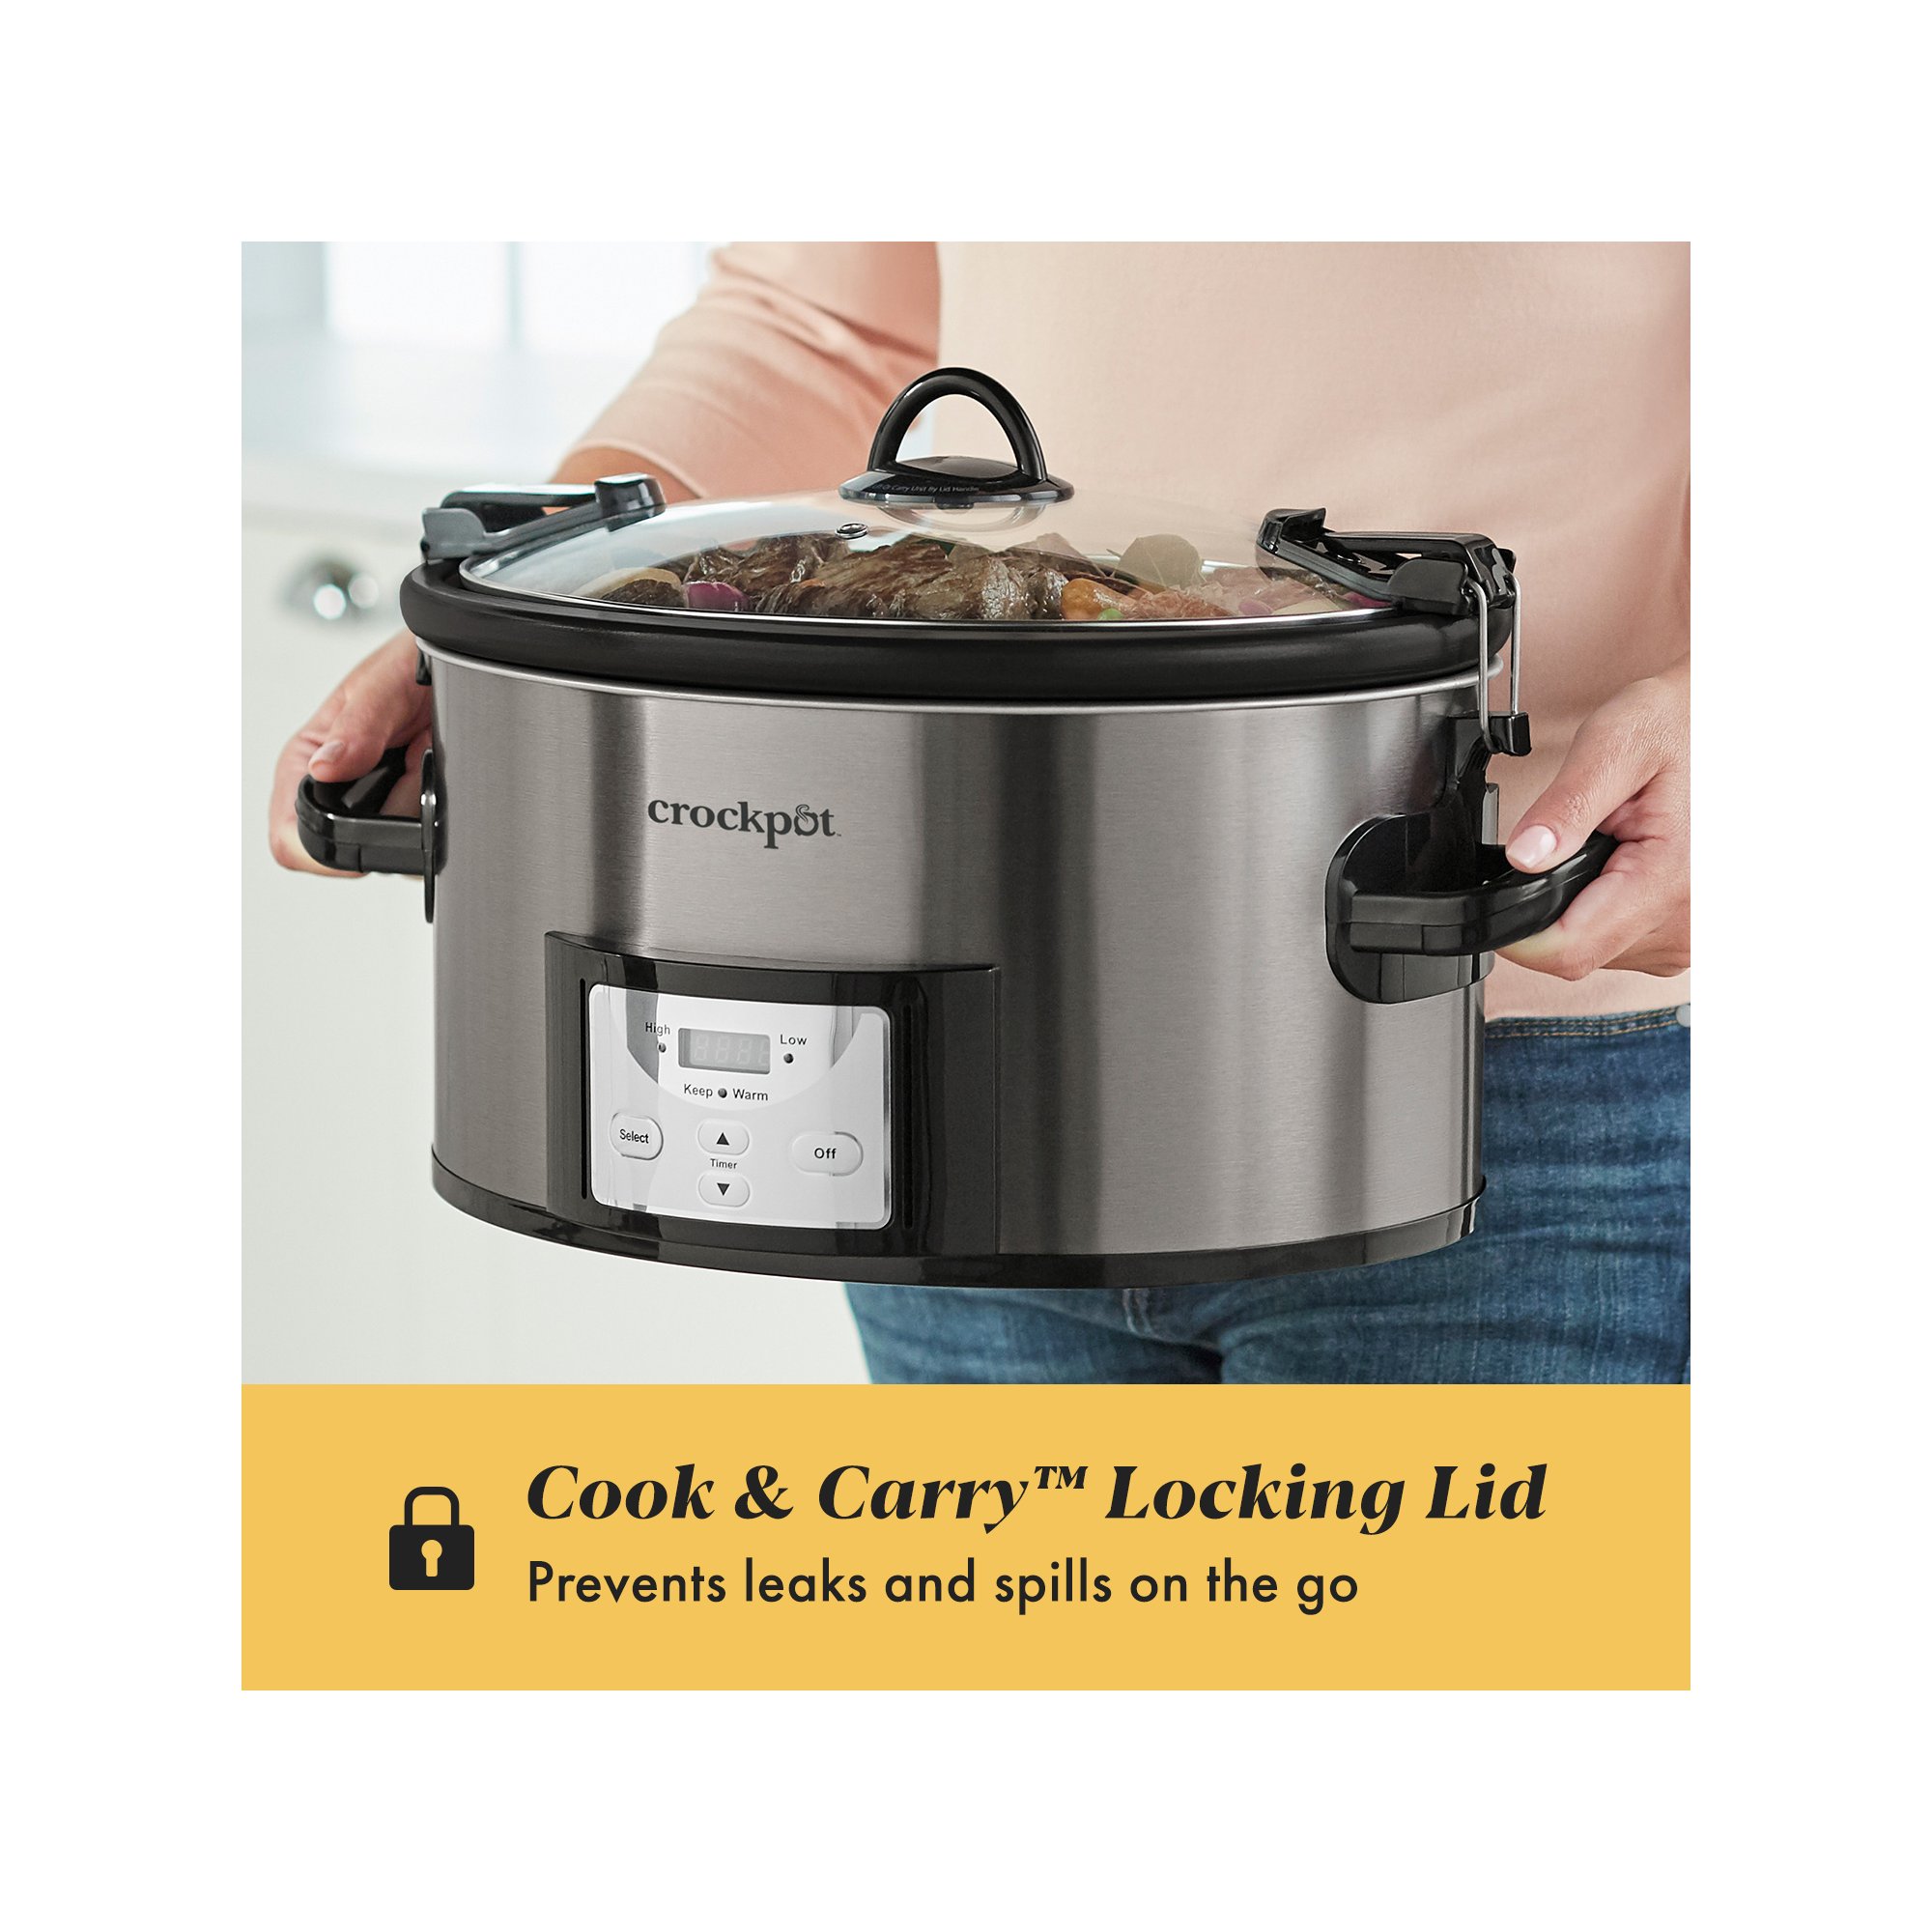 Get A Crock-Pot Slow Cooker For Just £20 - Tech Advisor